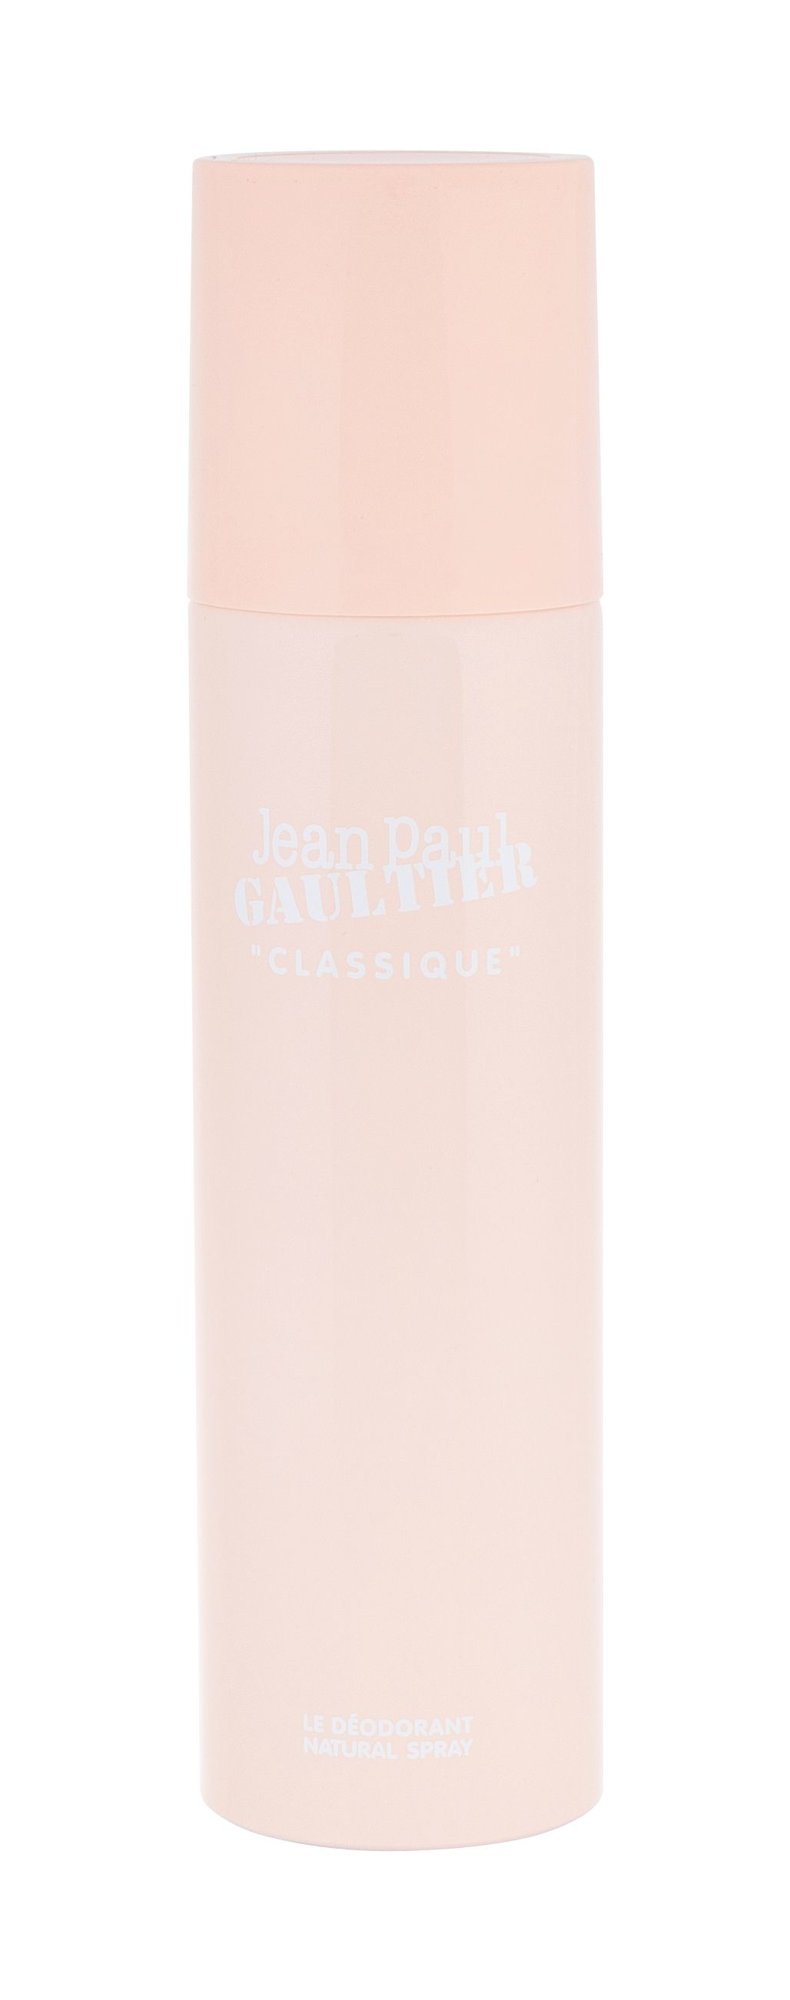 Jean Paul Gaultier Classique 150ml dezodorantas